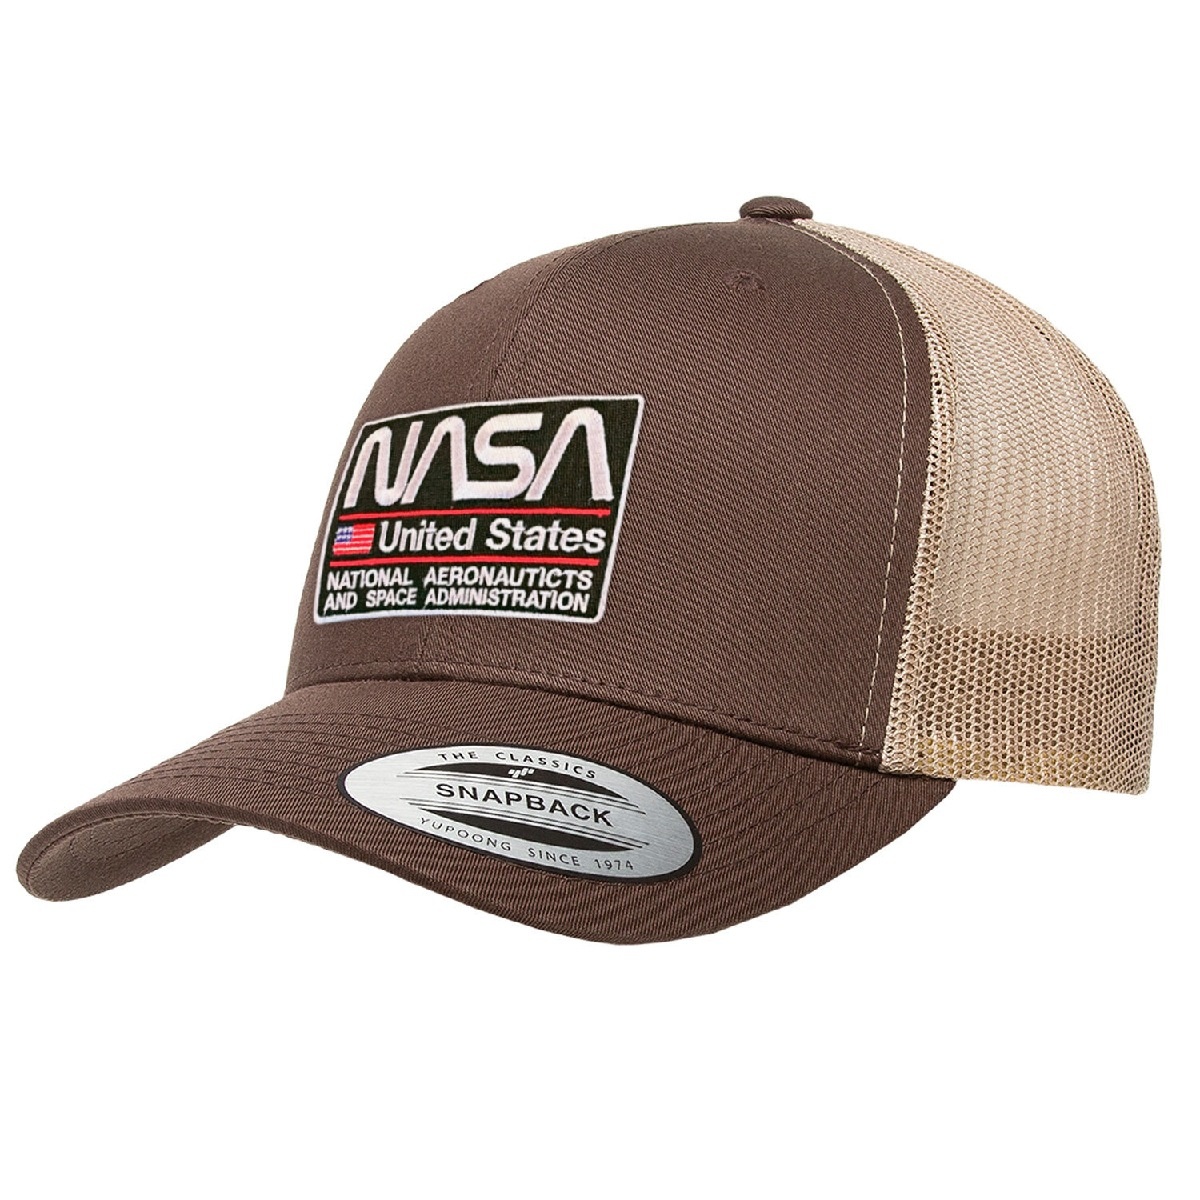 čepice NASA United States Premium Trucker hnědá/béžová